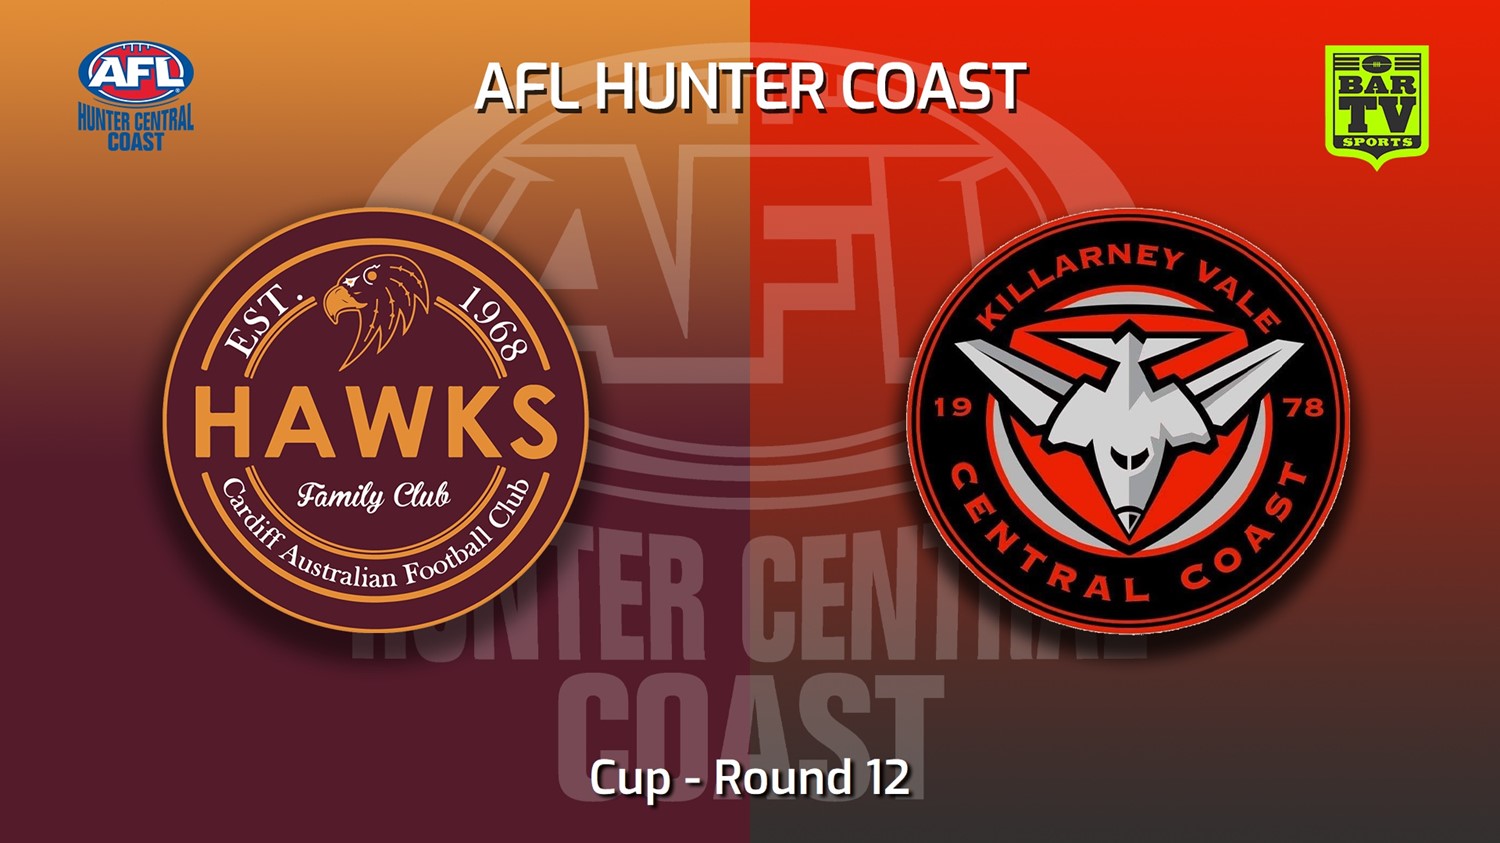 220709-AFL Hunter Central Coast Round 12 - Cup - Cardiff Hawks v Killarney Vale Bombers Minigame Slate Image